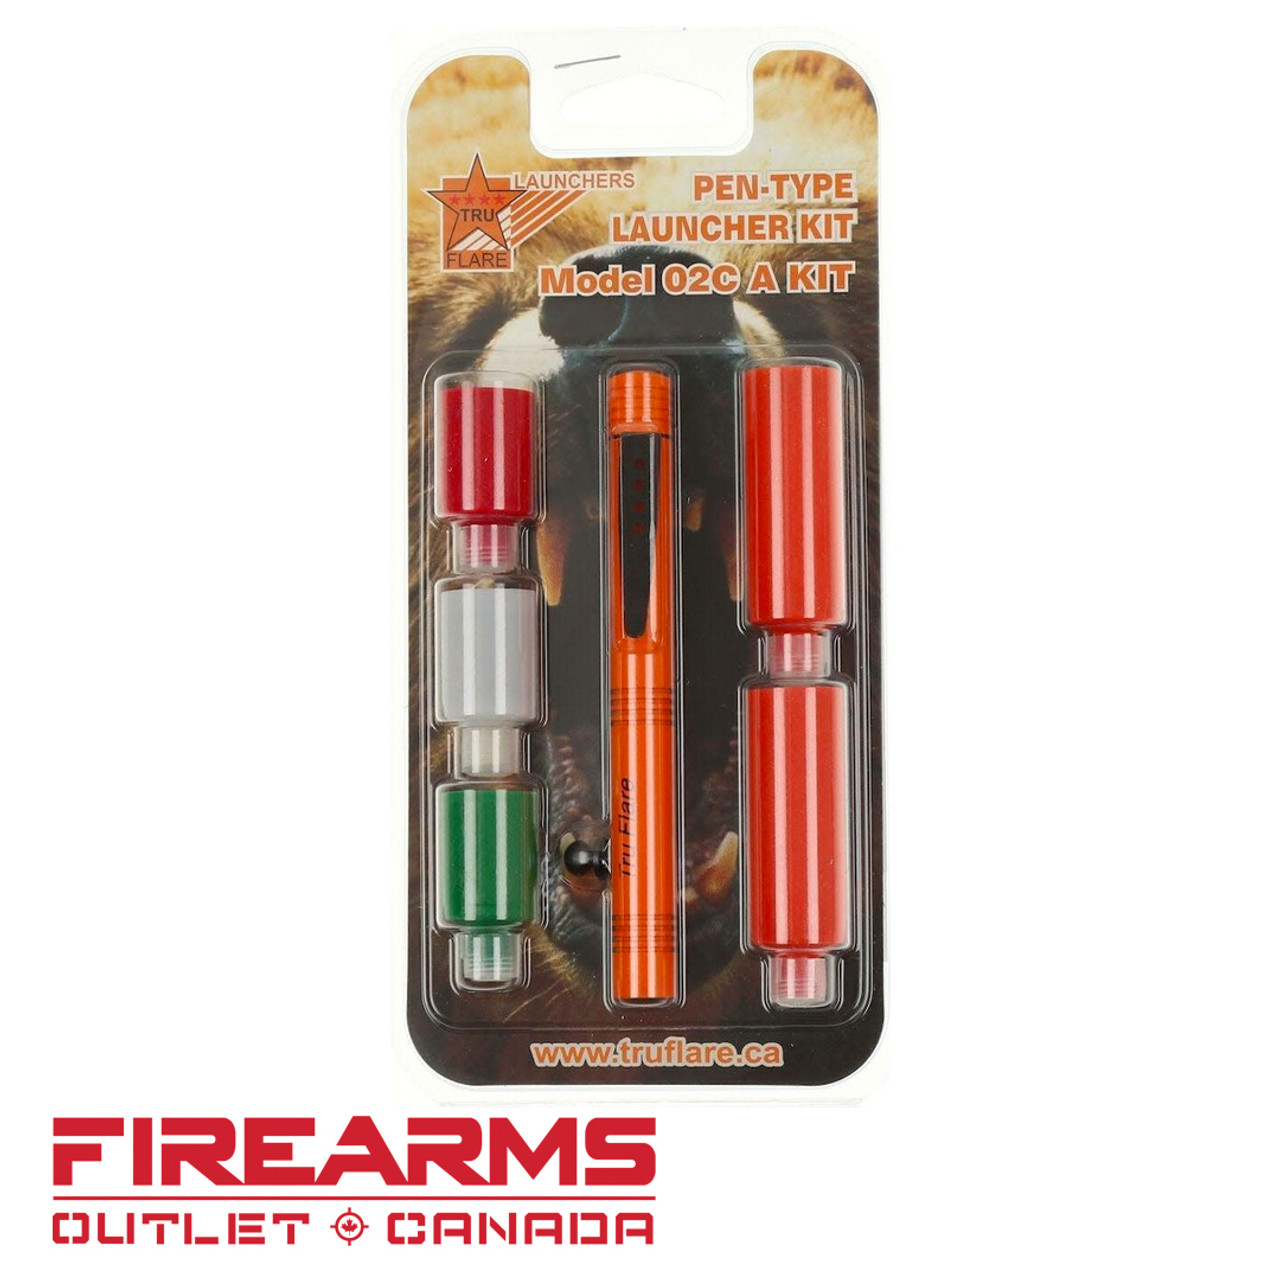 Tru Flare Pen Launcher Kit [02CAKIT]